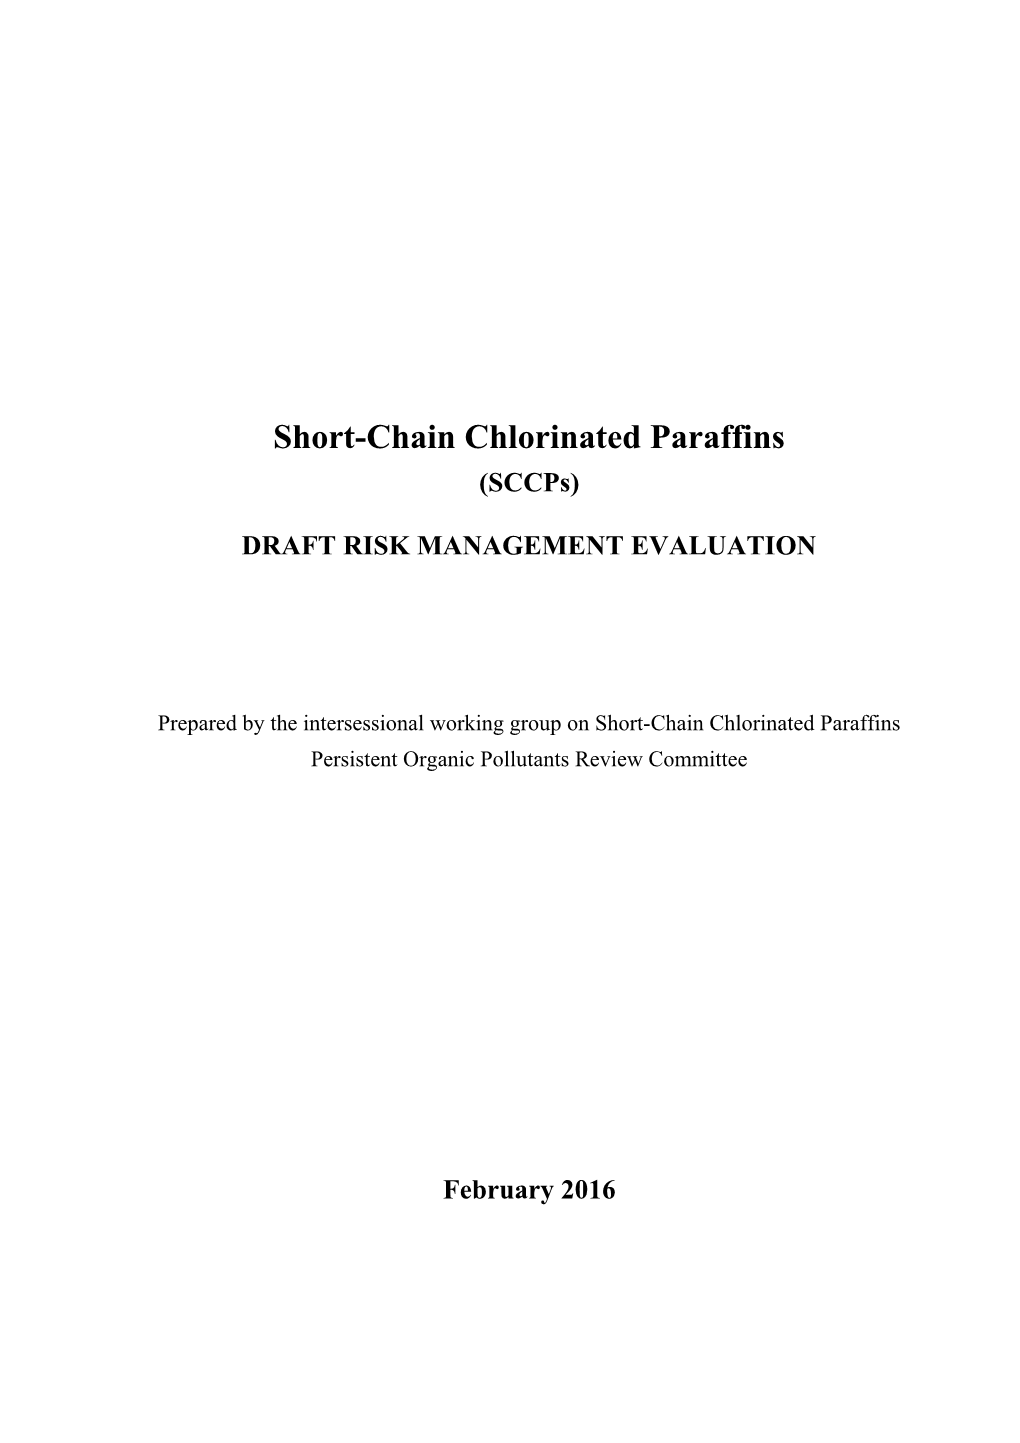 Risk Management Evaluation Endosulfan s2